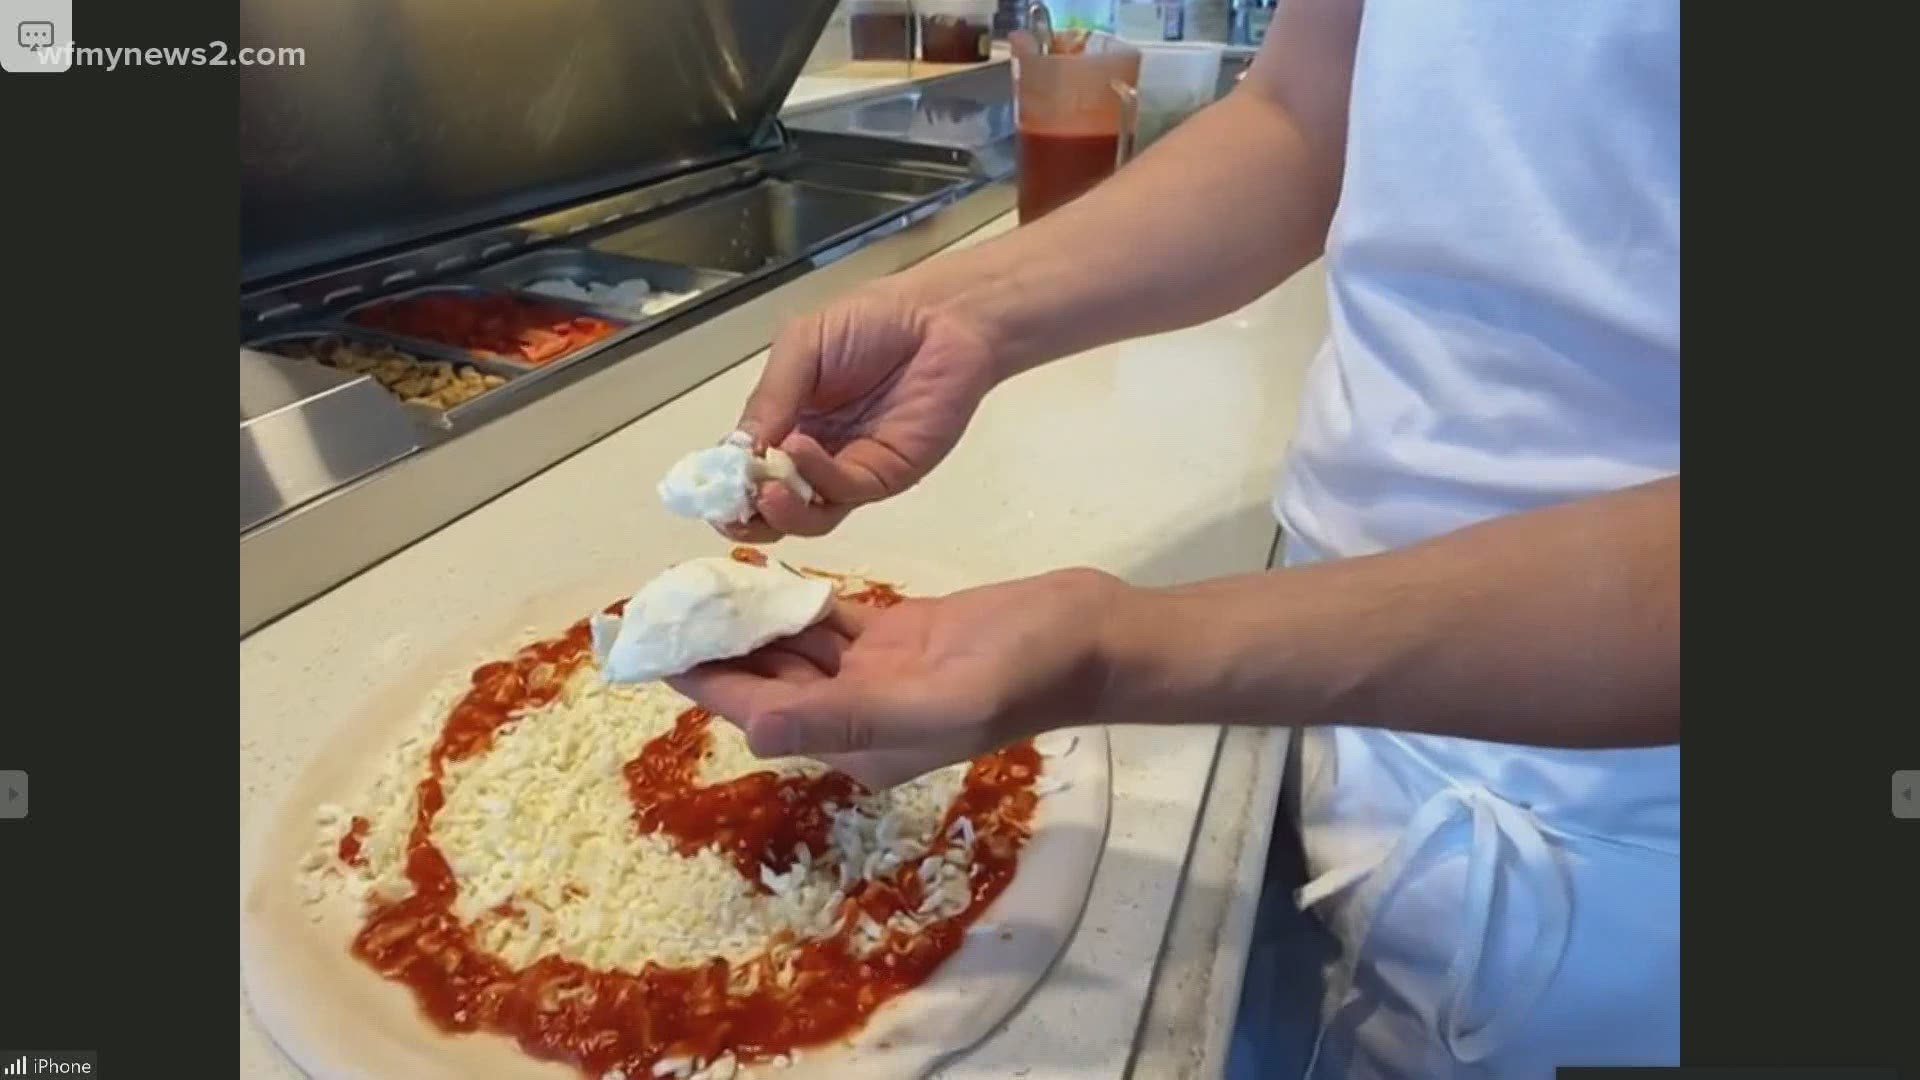 Cugino Forno Pizzeria shares their recipes for authentic Italian pizza.